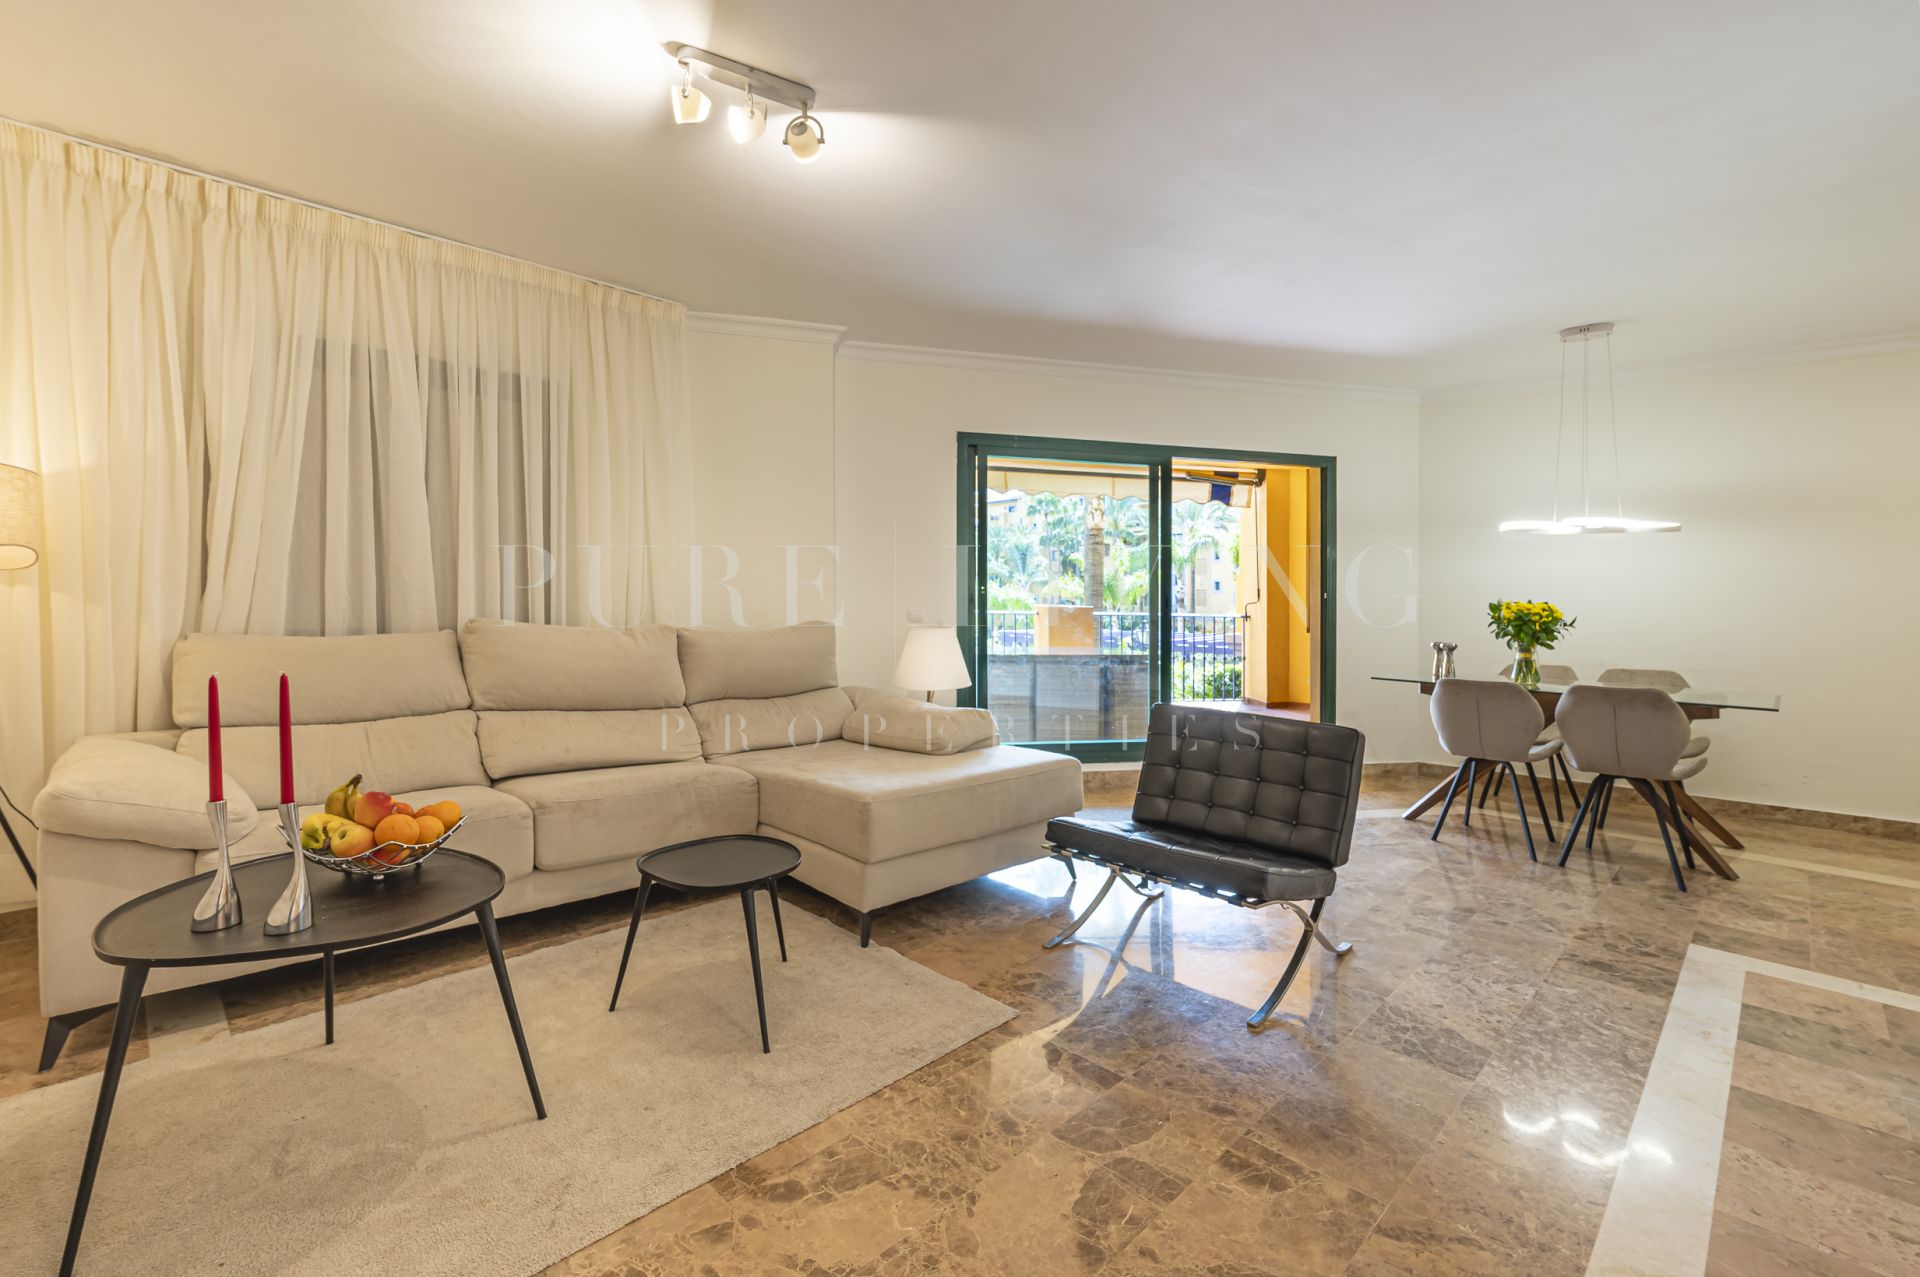 Stunning four bedroom apartment located in a prime location in Cortijo Blanco, San Pedro de Alcantara